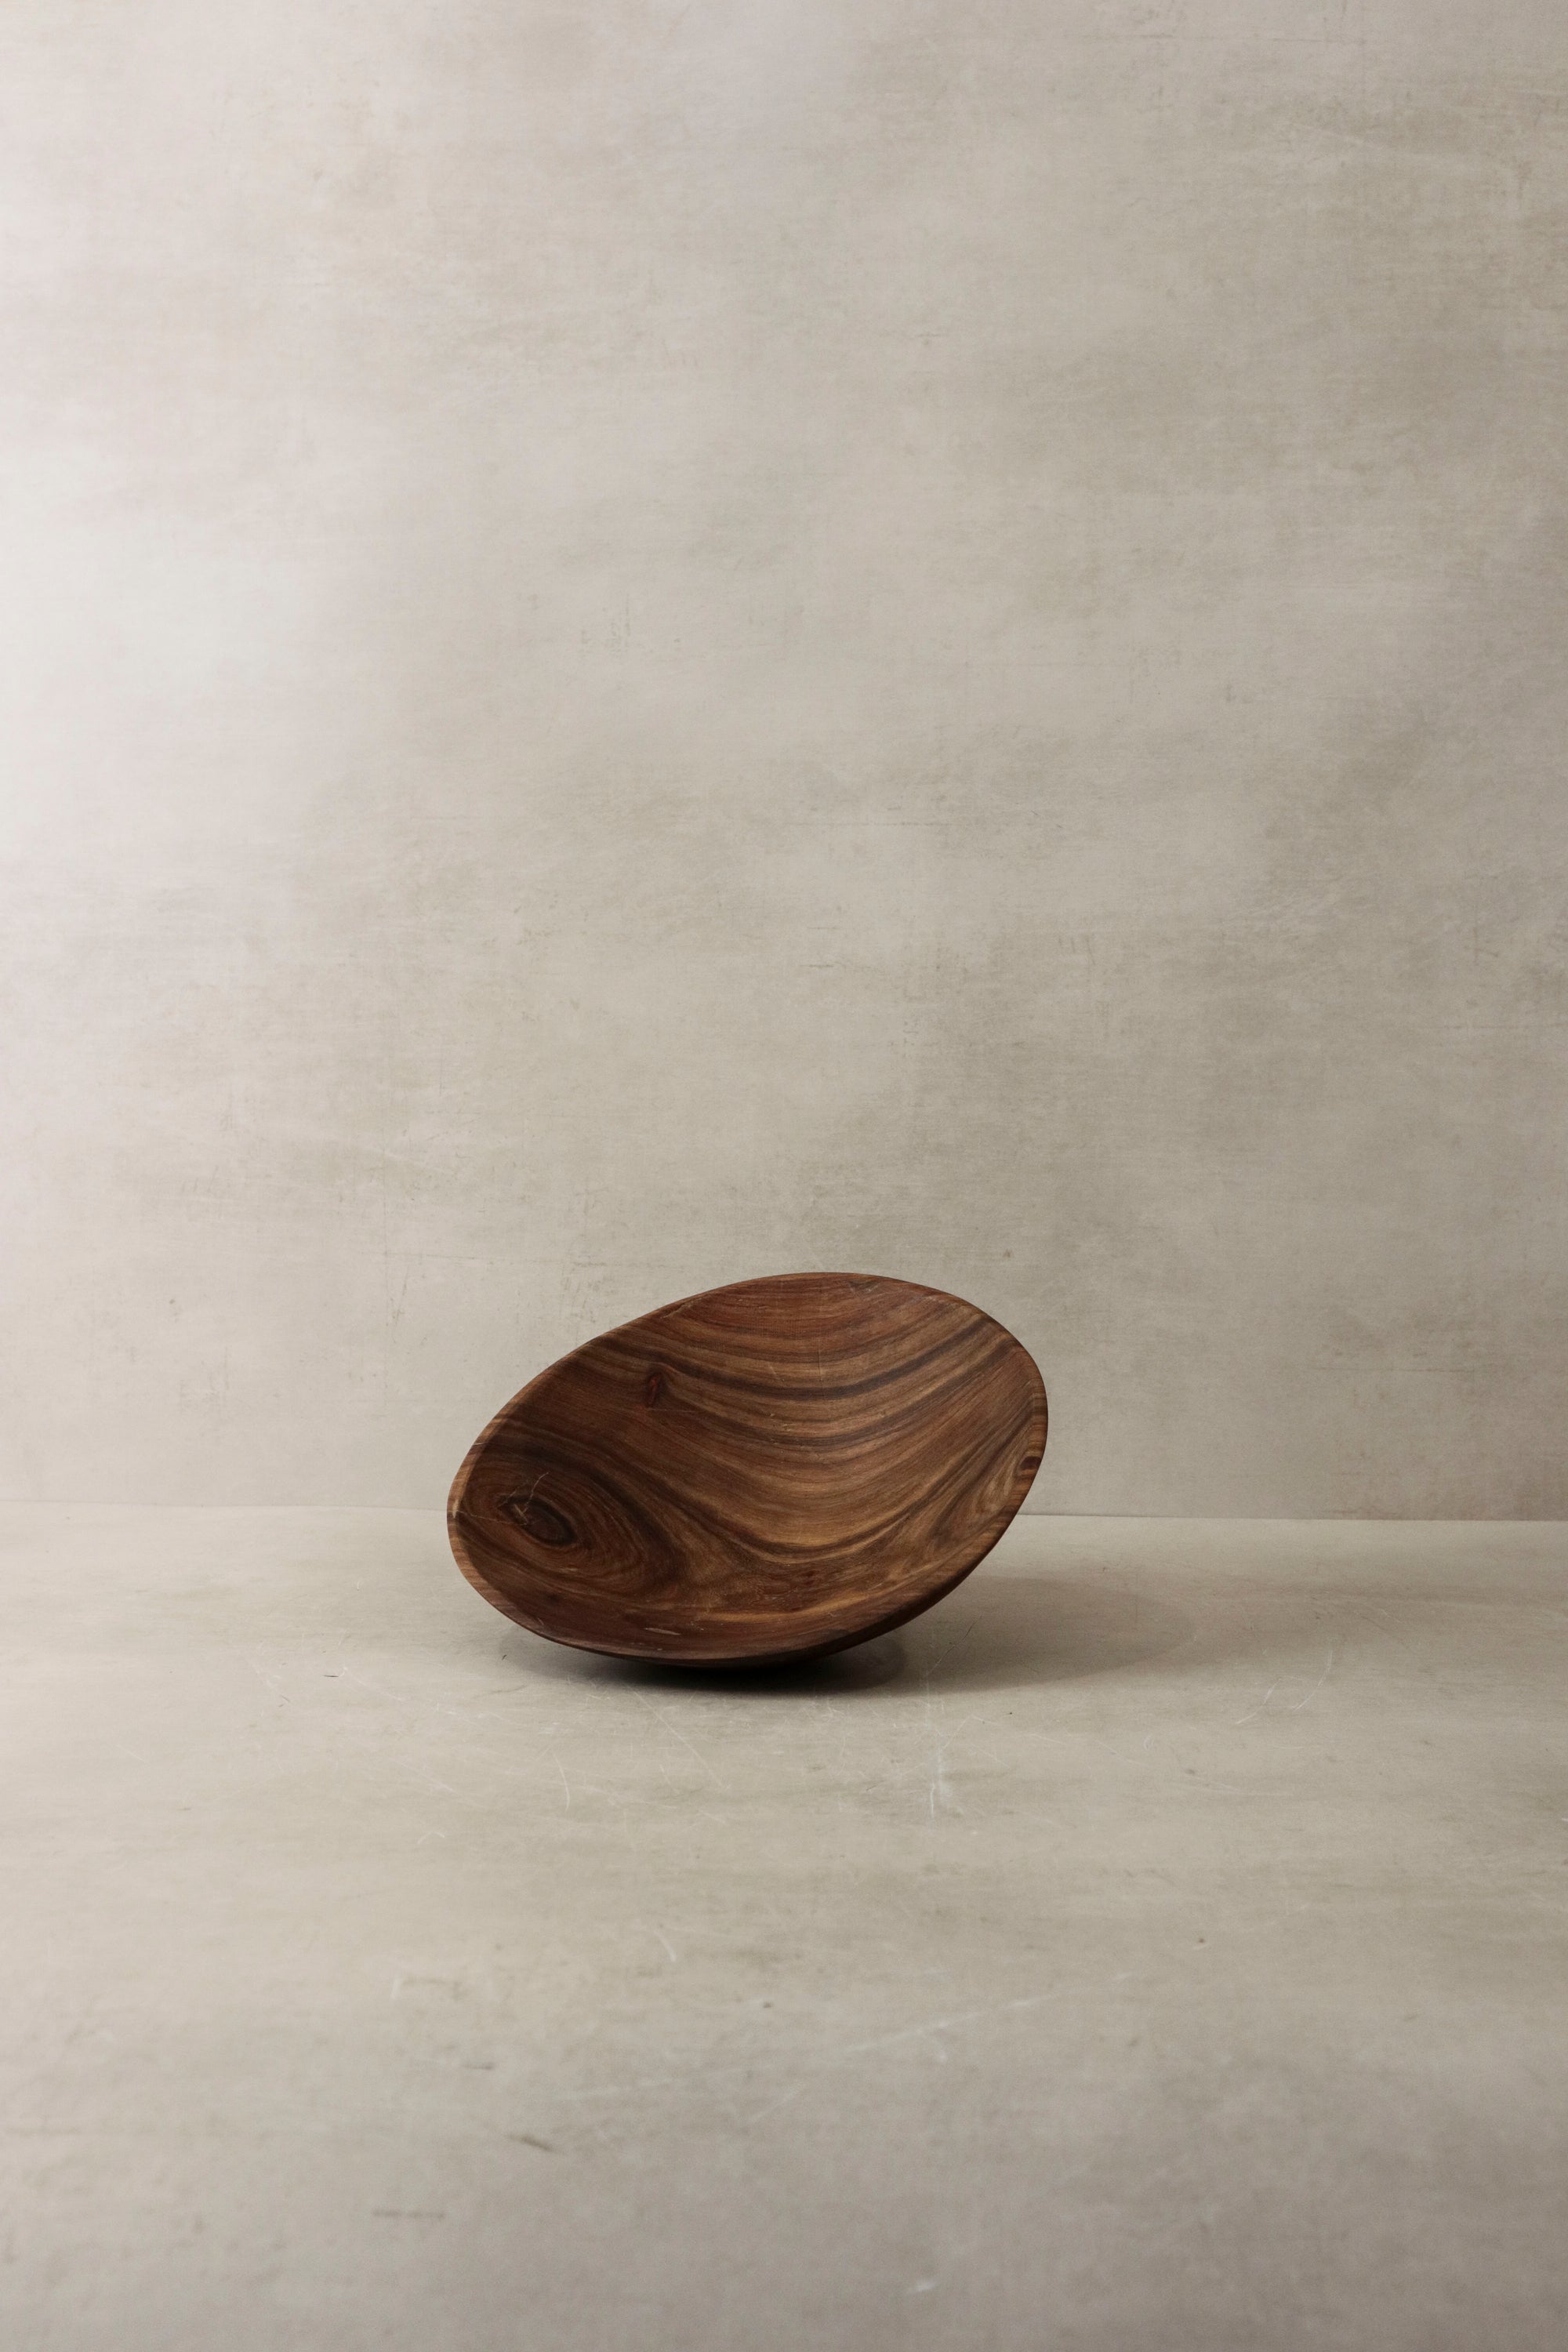 Handmade wooden bowl, Zimbabwe - 12.2